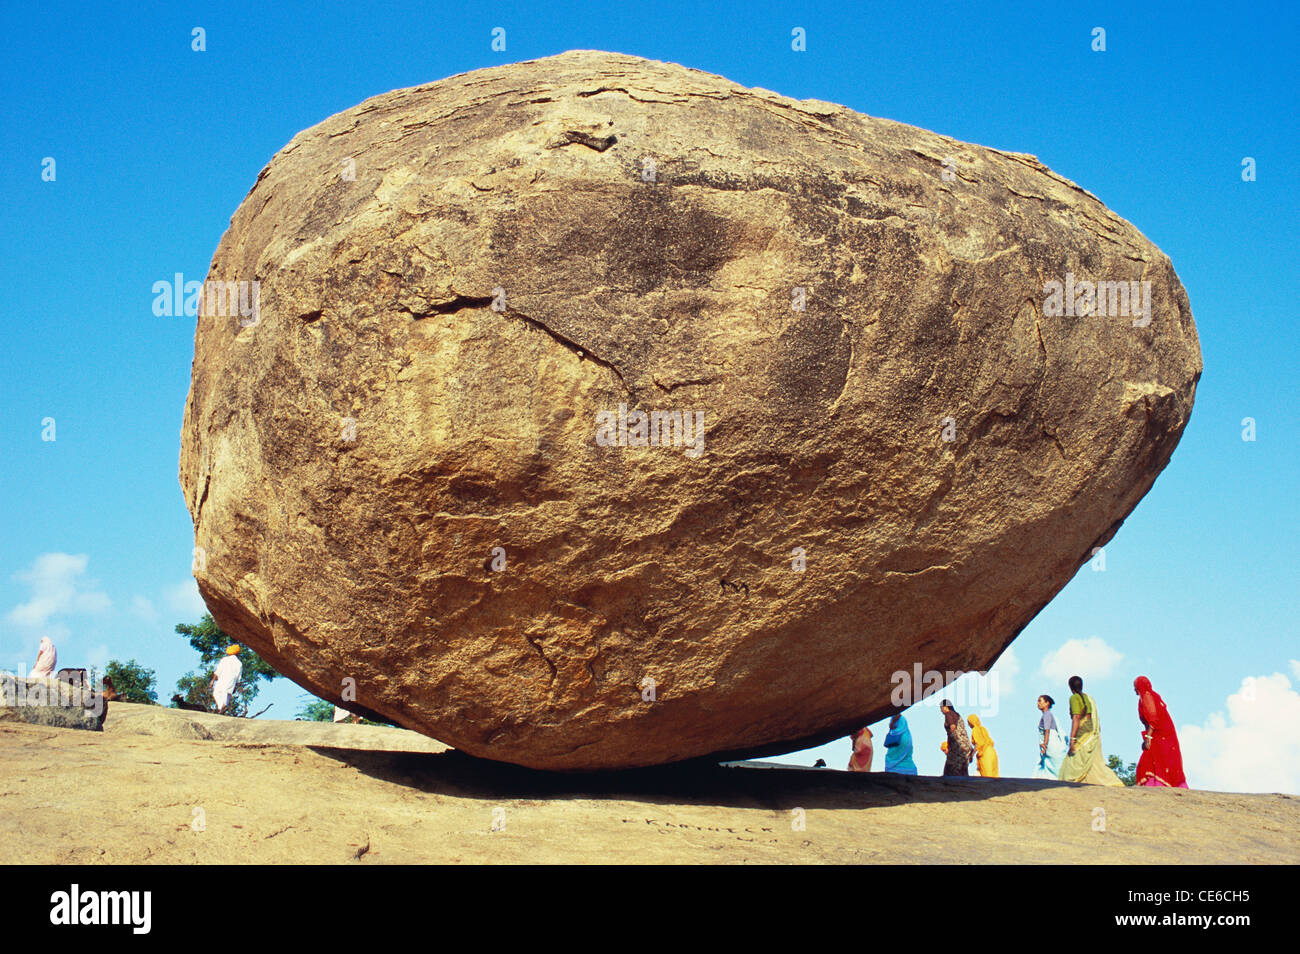 Krishnas Butter ball ; équilibrant gigantesque rocher de pierre de granit ; Mahabalipuram ; Mamallapuram ; Tamil nadu ; inde ; asie Banque D'Images